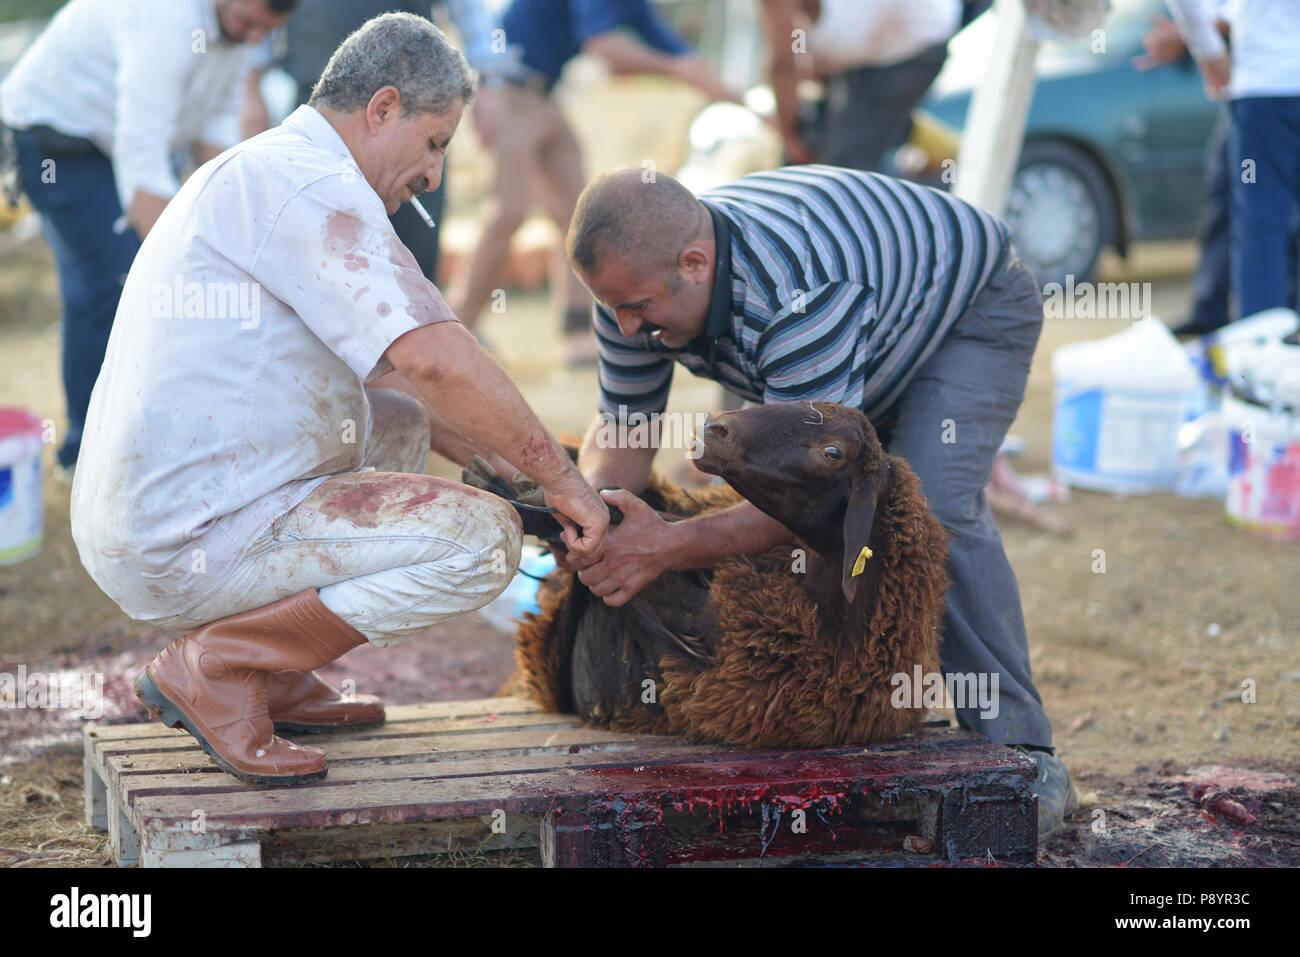 Muslim man slaughtering sheep, for the Eid-al Adha sacrifiyng feast, Feast of sacrifice Stock Photo